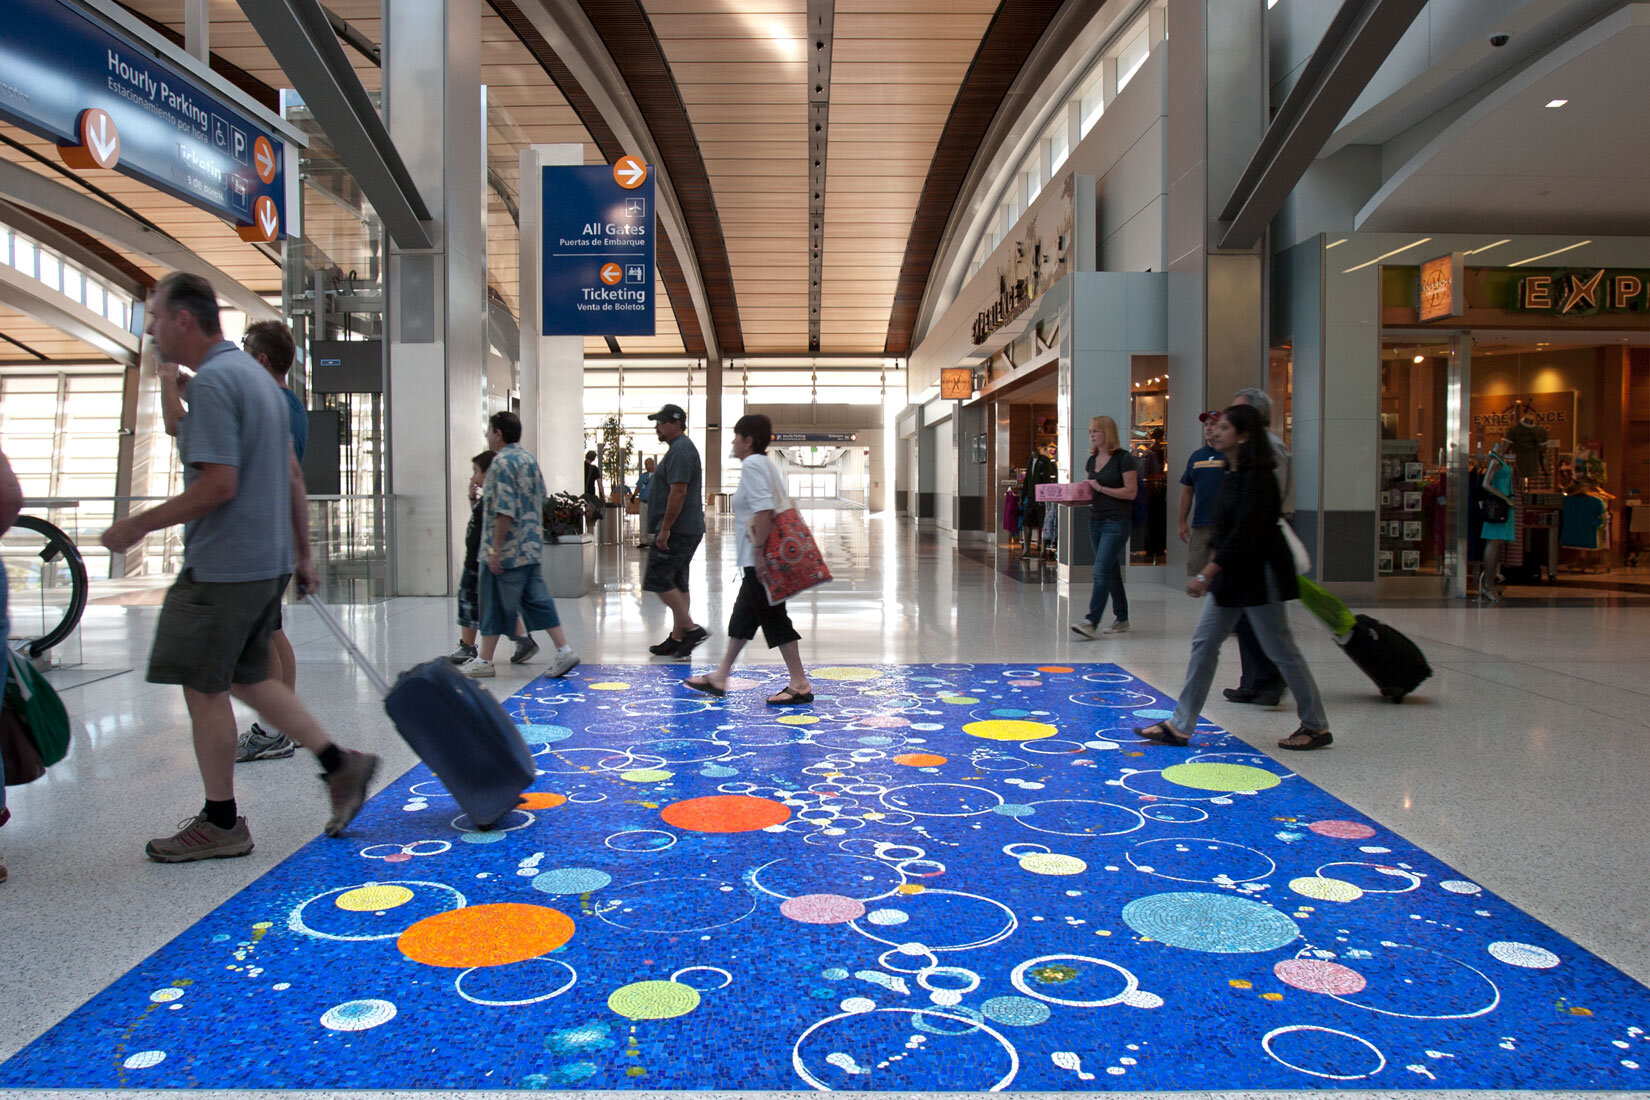   A Fragment of the Universe,  2011, glass mosaic, 12' x 18' S.M.A.C. public art commission, Sacramento International Airport 